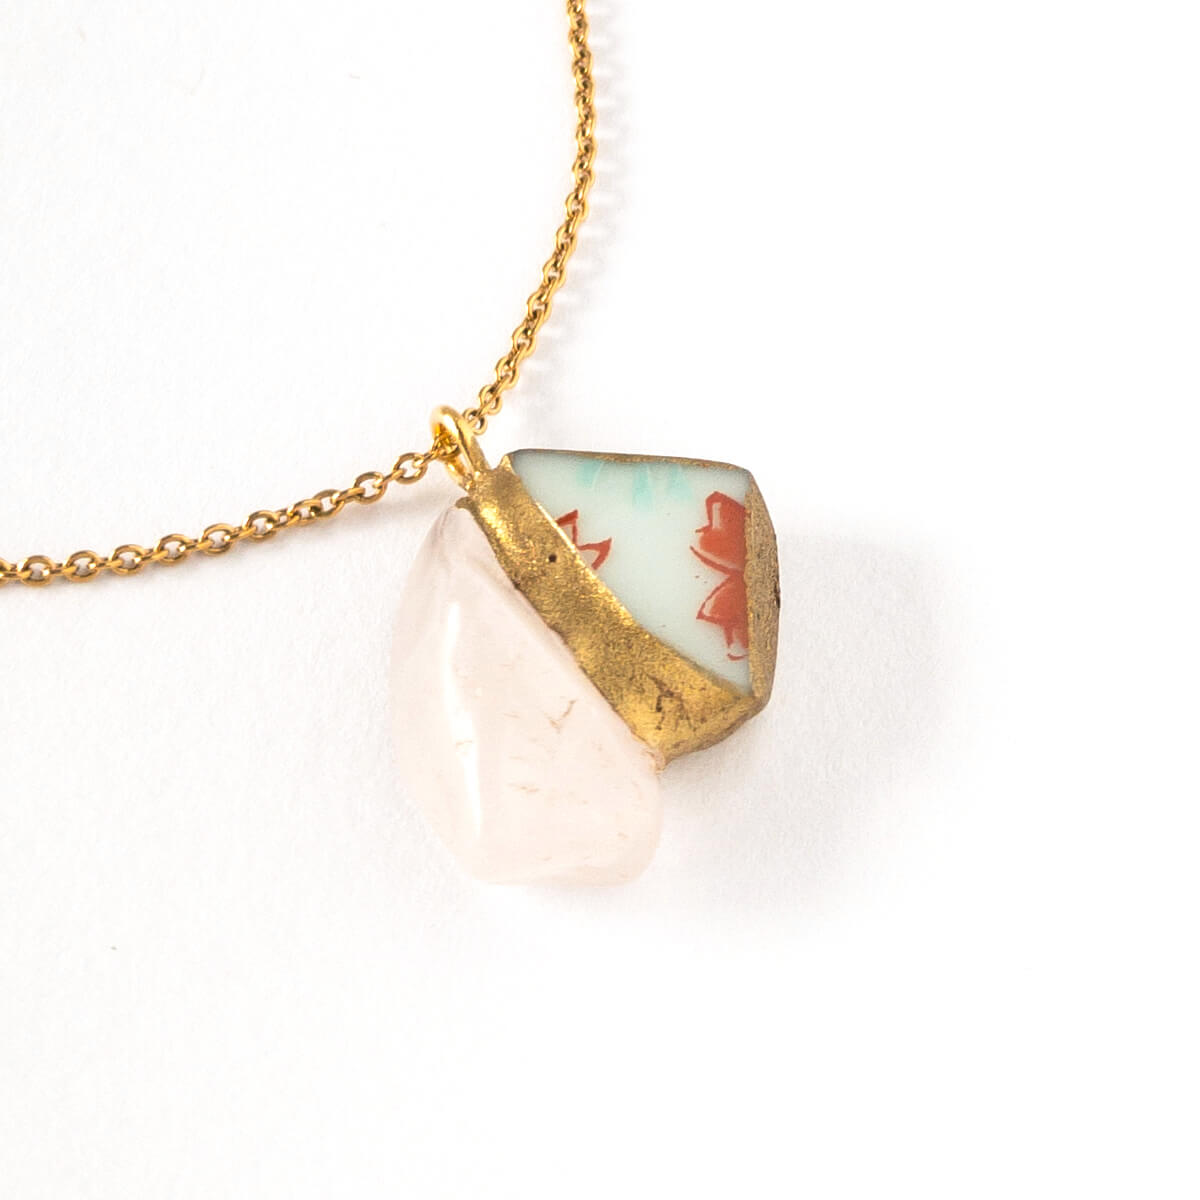 Rose quartz Necklace-Kintsugi jewelry-Japanese pottery jewelry-JAPONICA